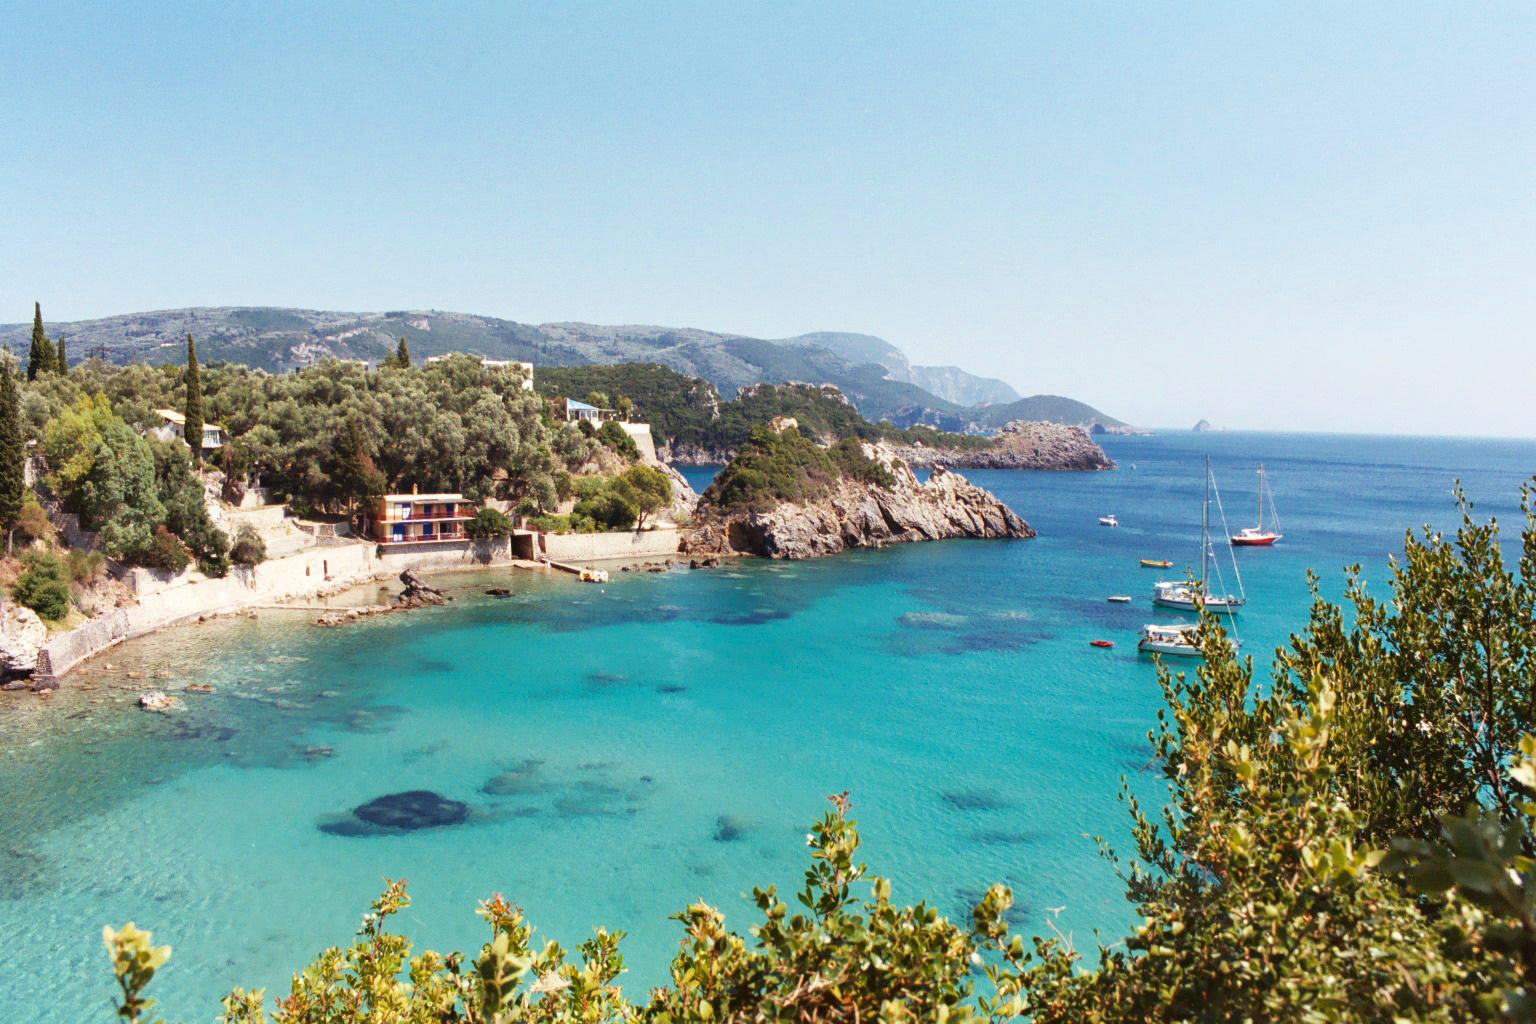 Corfu Island off the coast of Greece